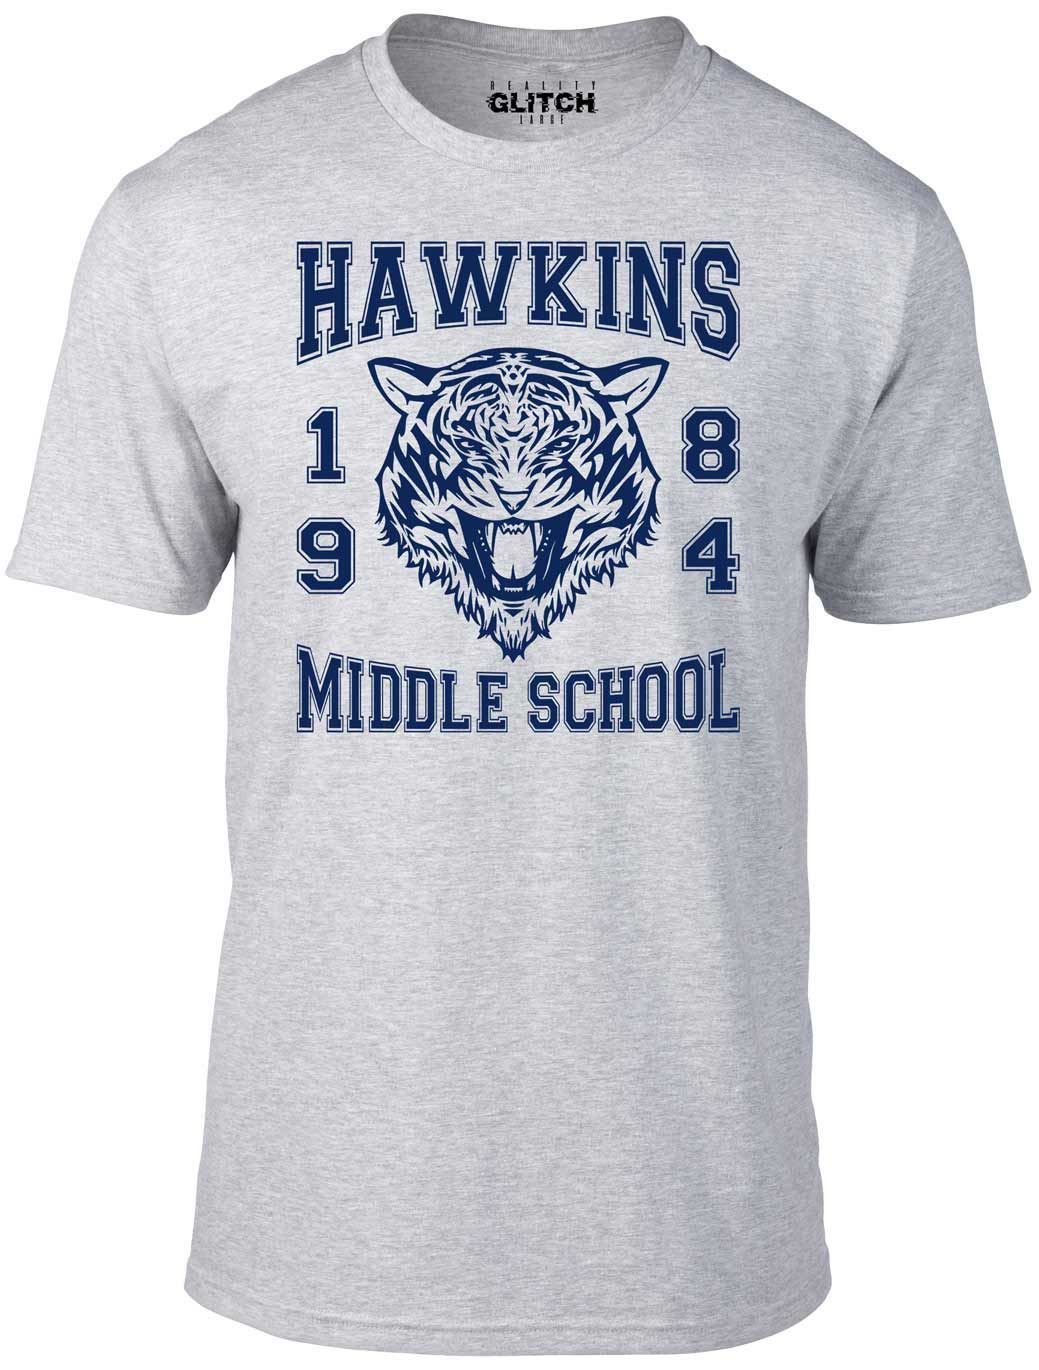 Mens Hawkins Middle School T Shirt Stranger Things Will Sci Fi